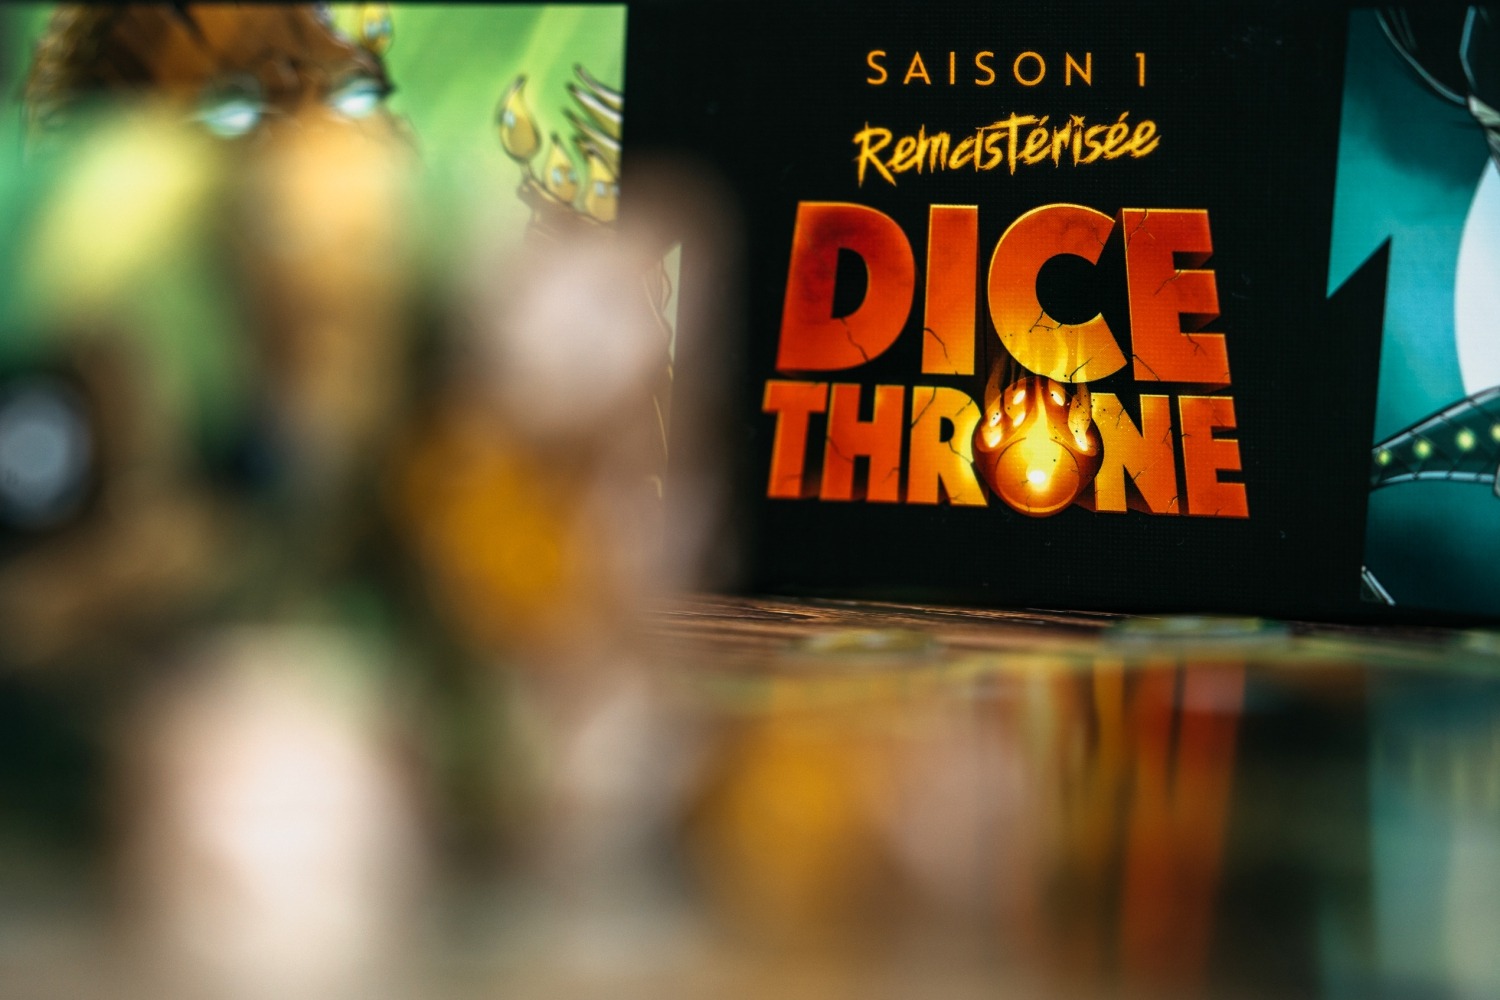 Dice throne saison 1 lucky duck games boardgame photo jeu de société treant ninja